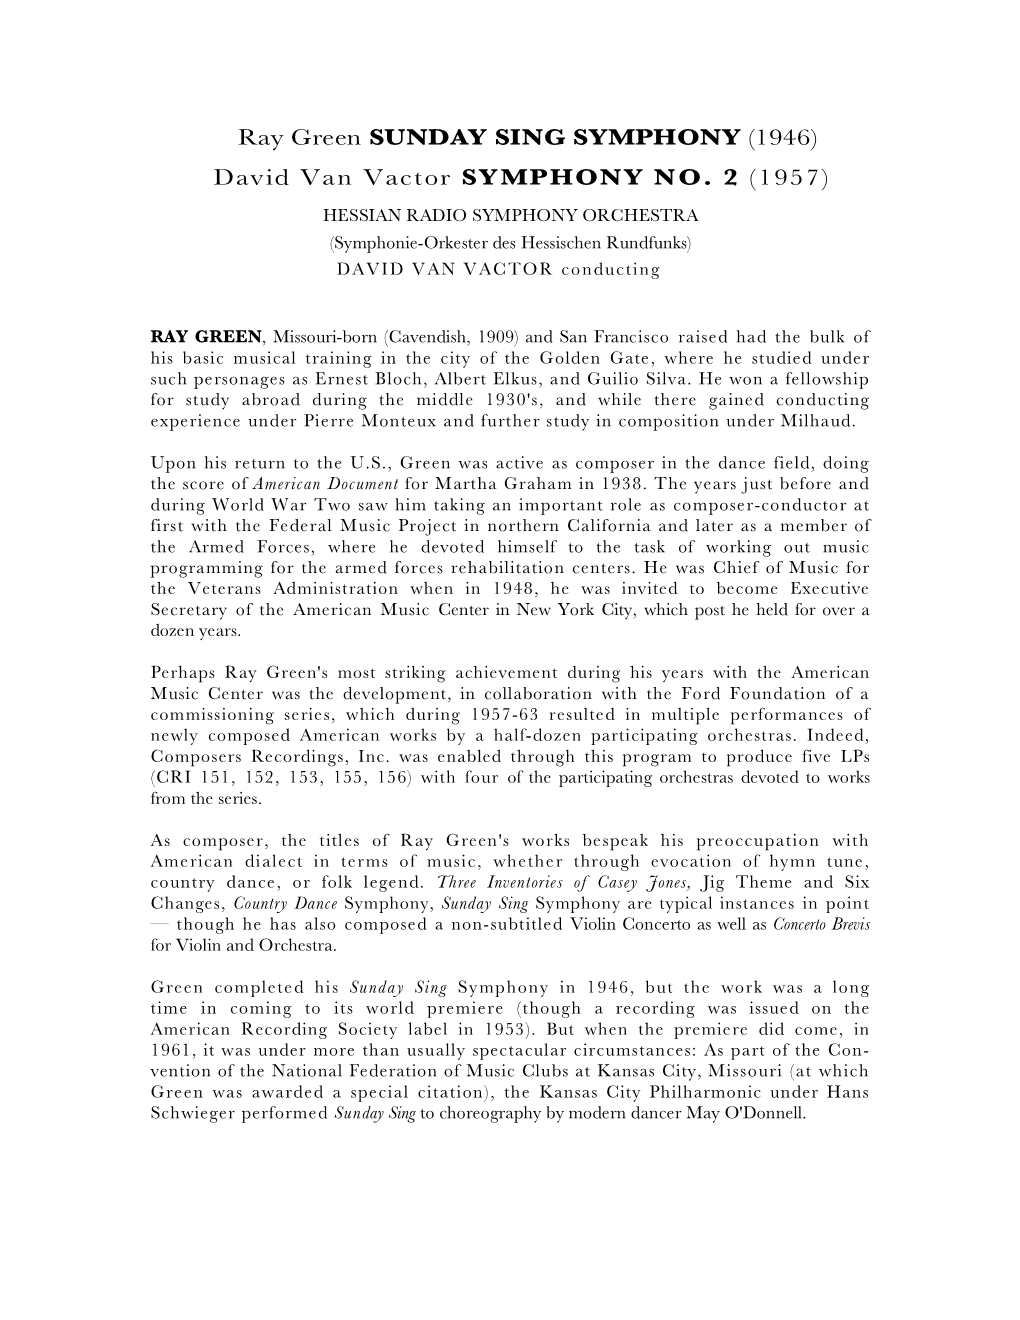 Ray Green SUNDAY SING SYMPHONY (1946) David Van Vactor SYMPHONY NO